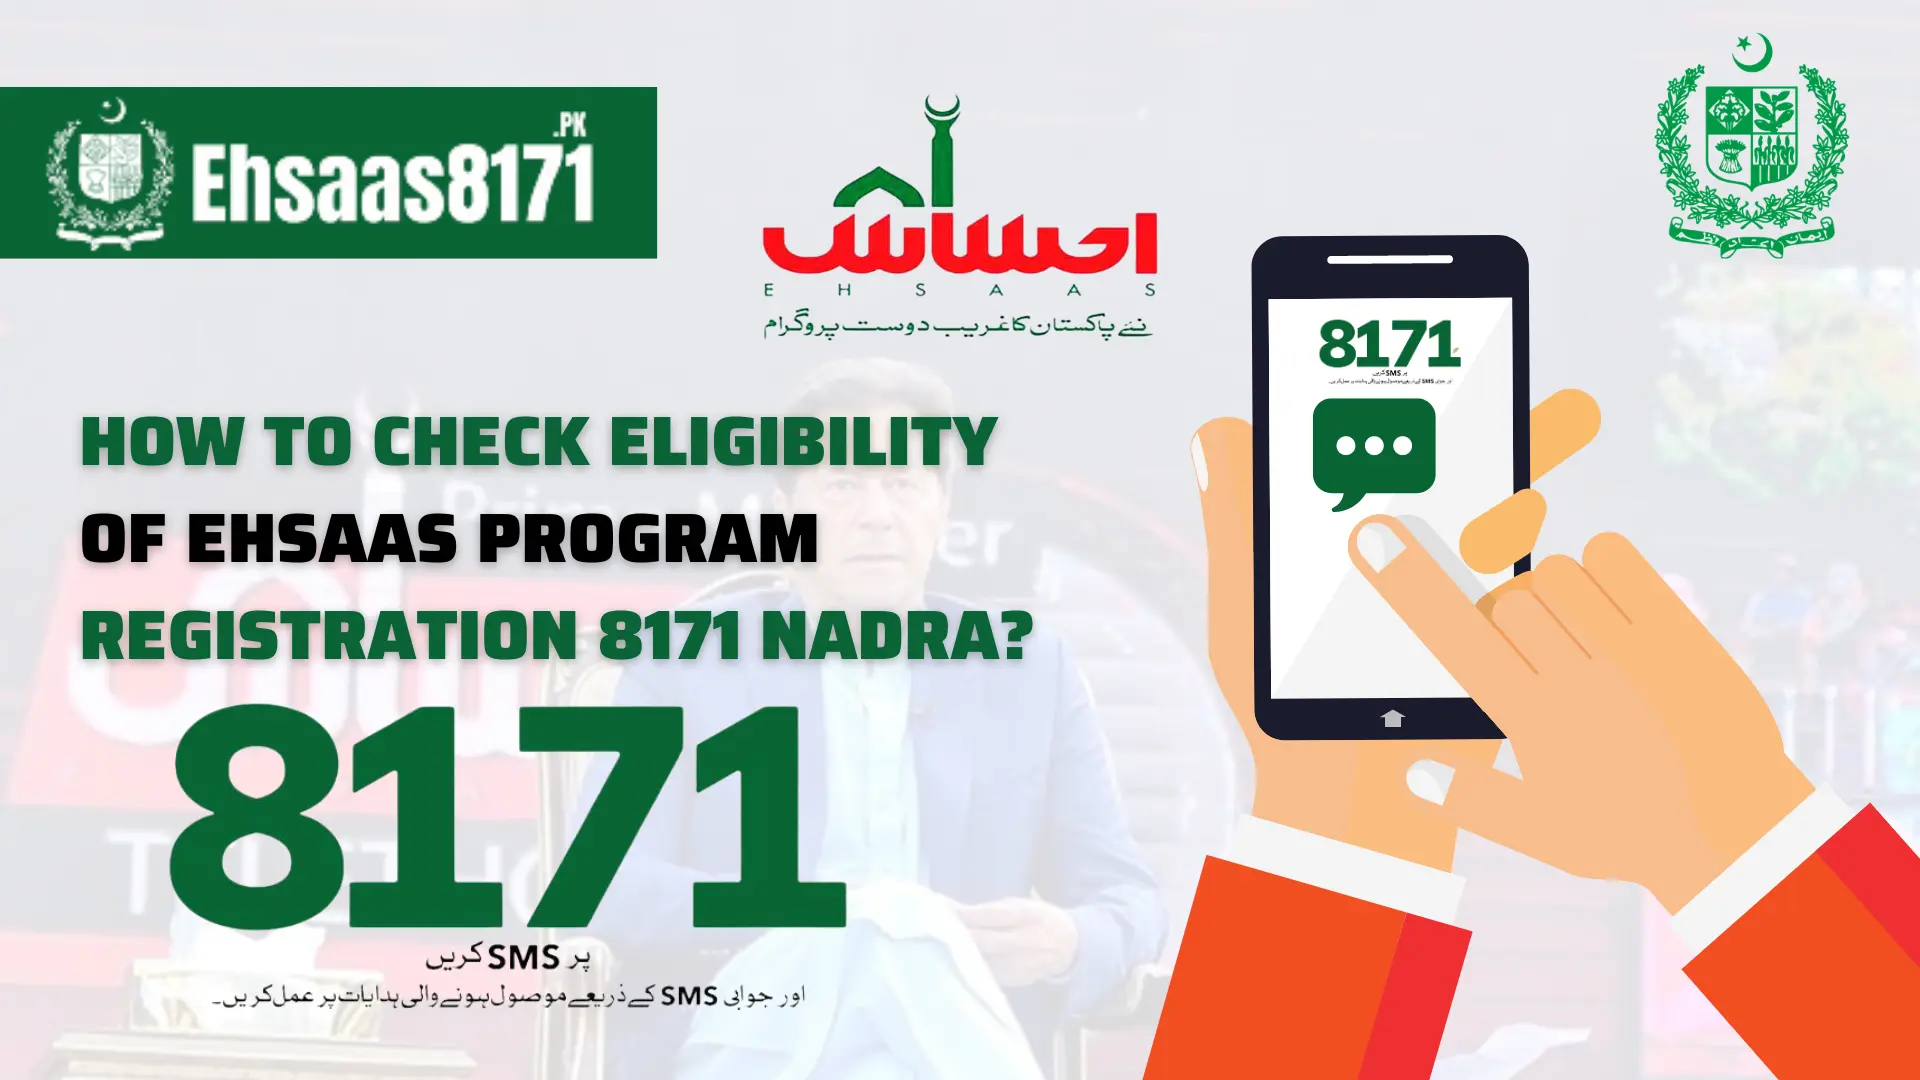 How to Check Eligibility of Ehsaas Program Registration 8171 NADRA?